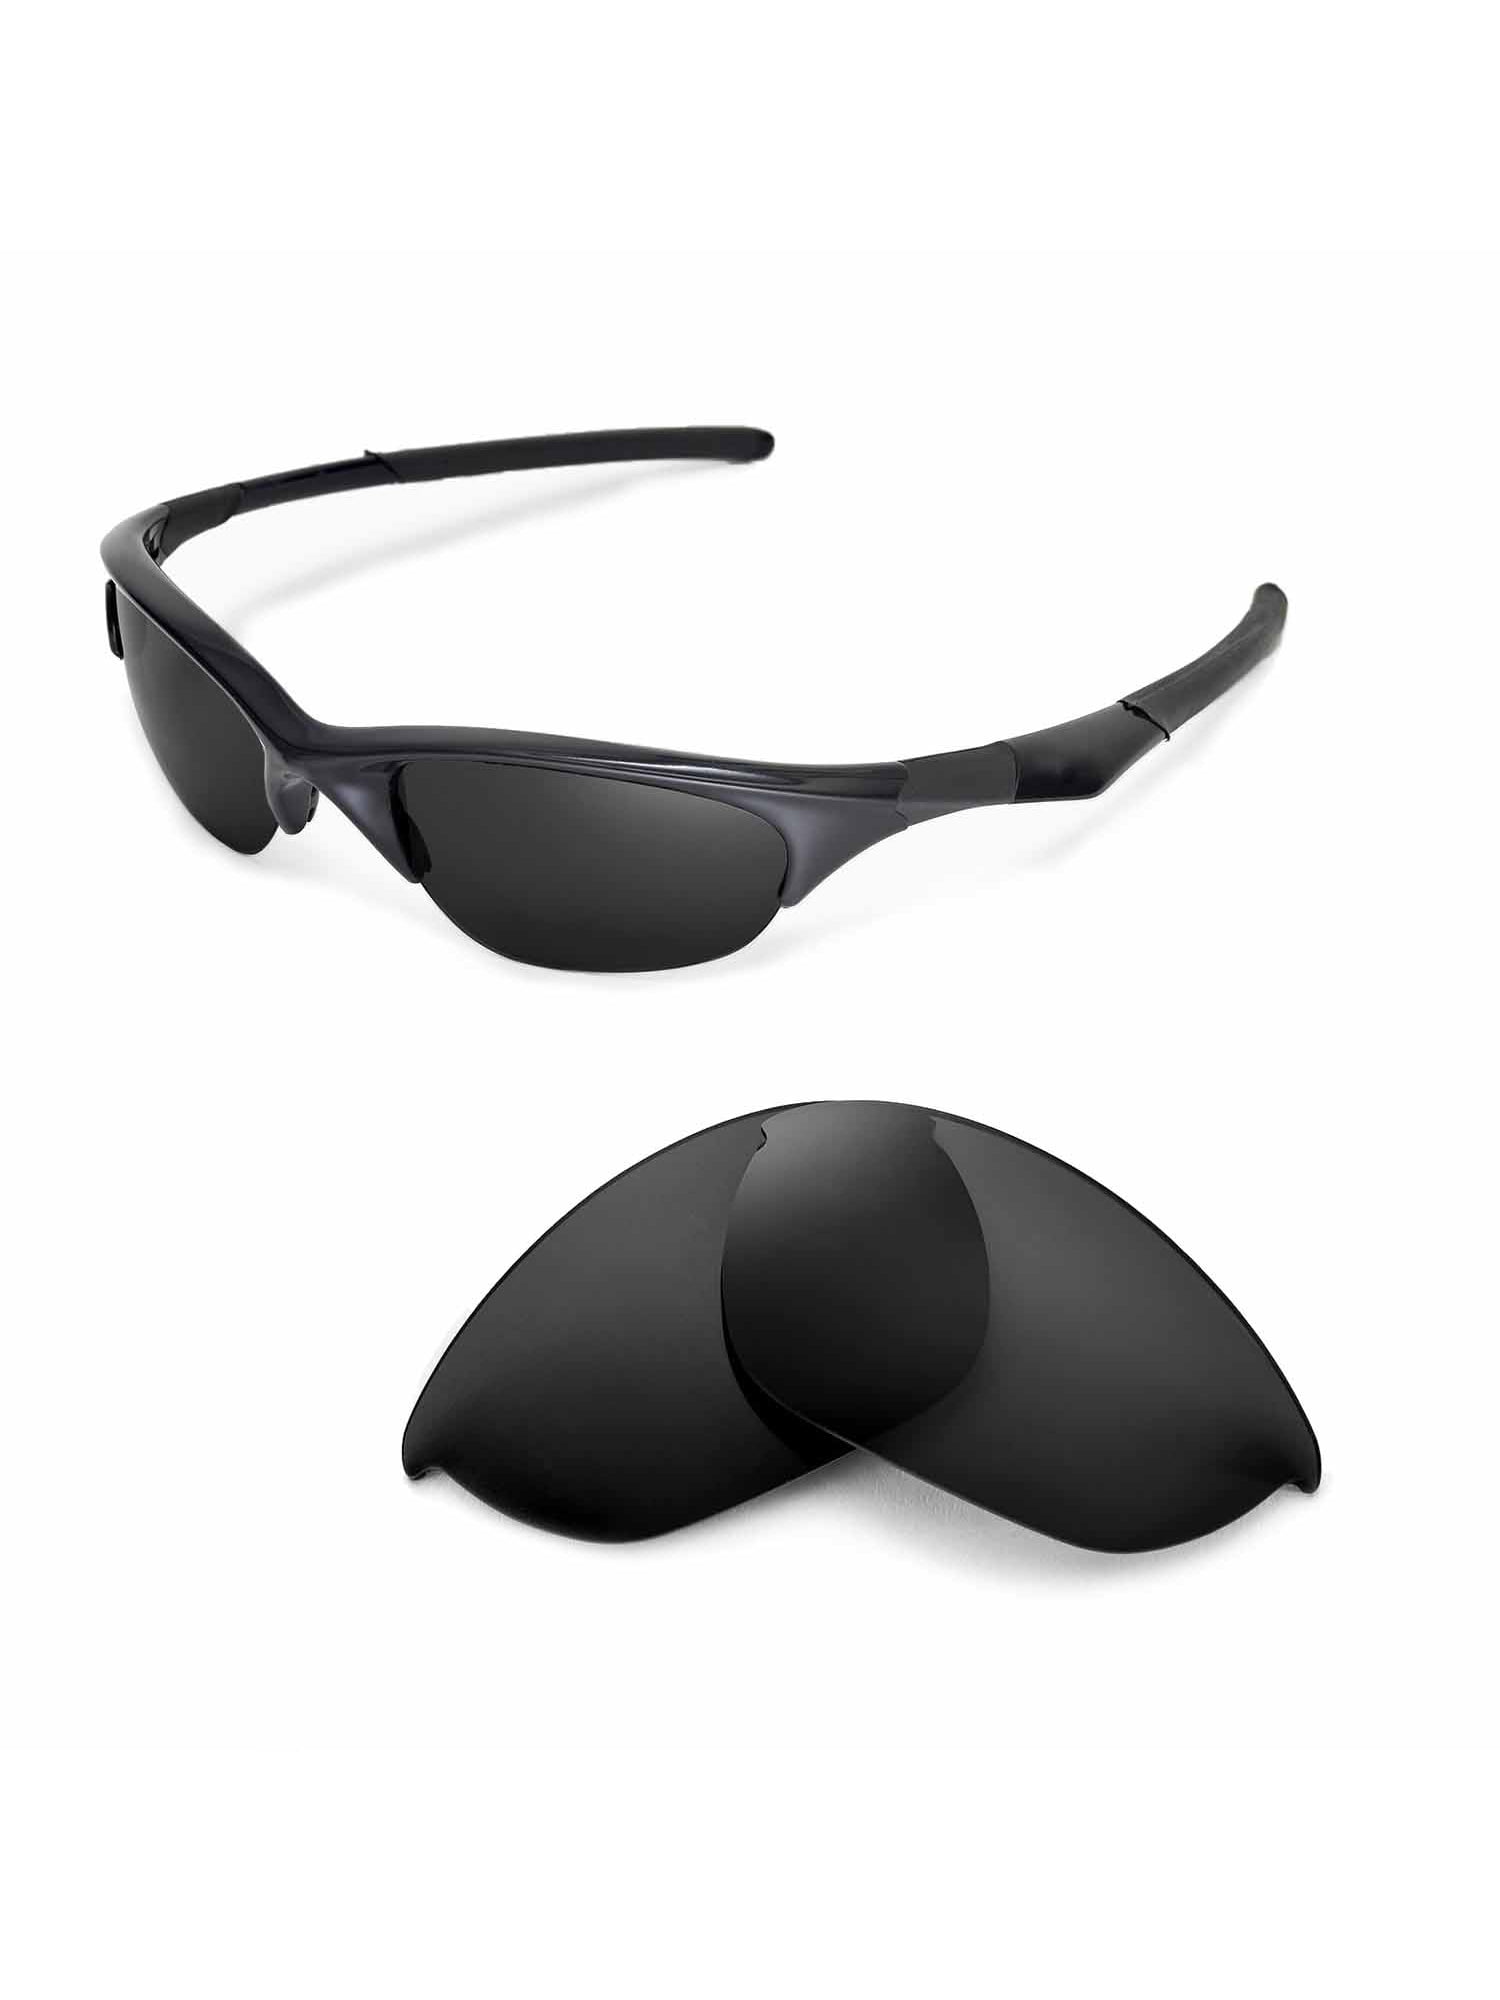 Walleva Black Polarized Replacement Lenses for Oakley Half Jacket Sunglasses  